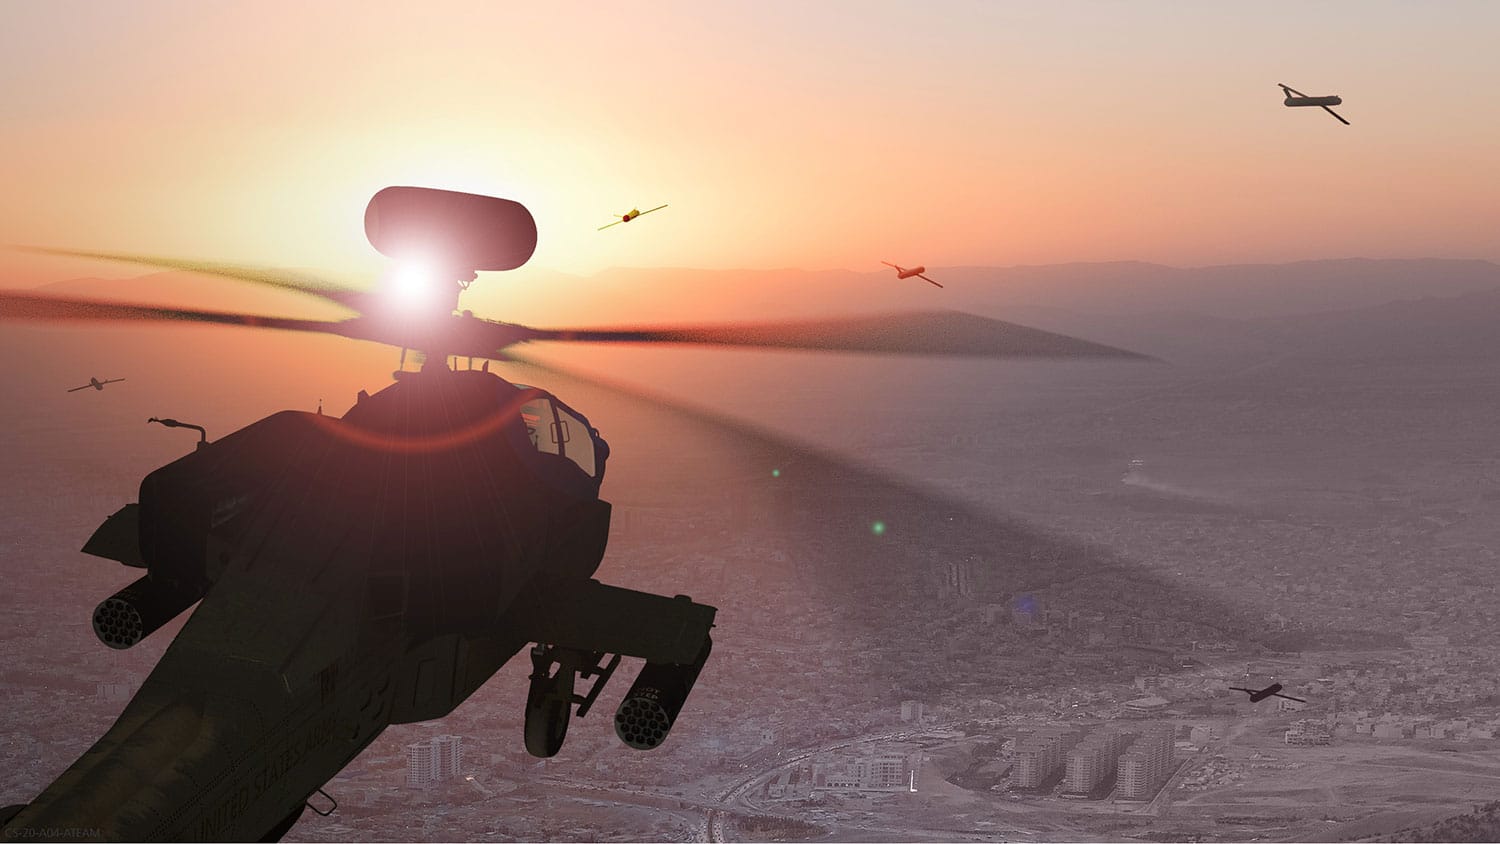 BAE System to develop autonomy capabilities for U.S. Army’s FVL initiative.